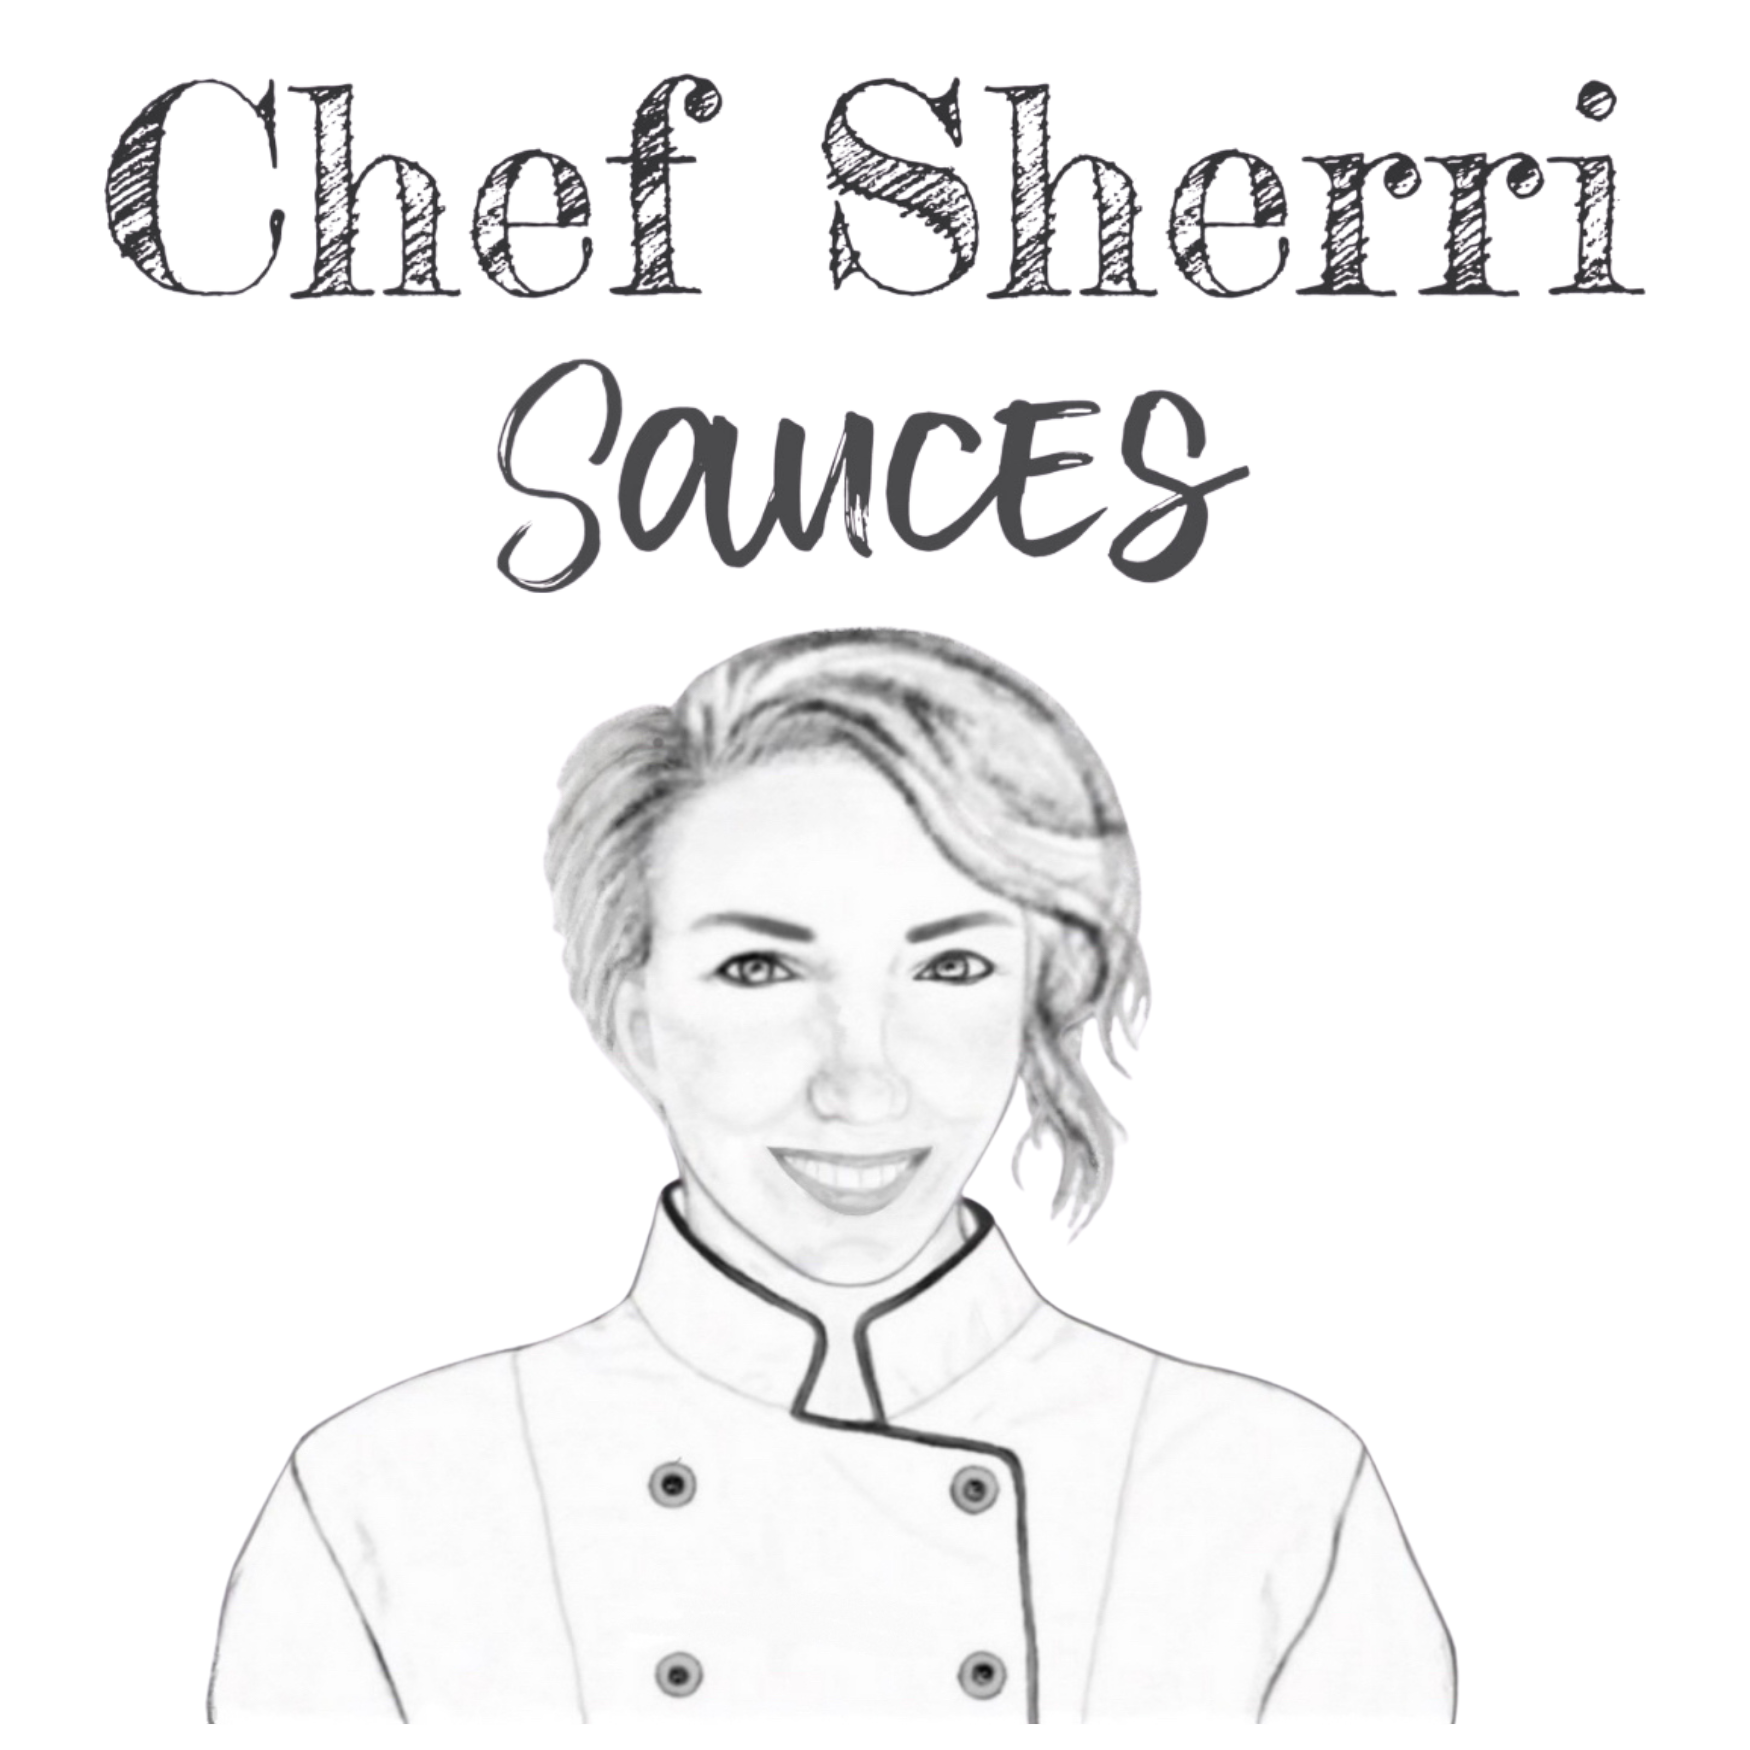 Chef Sherri Sauces